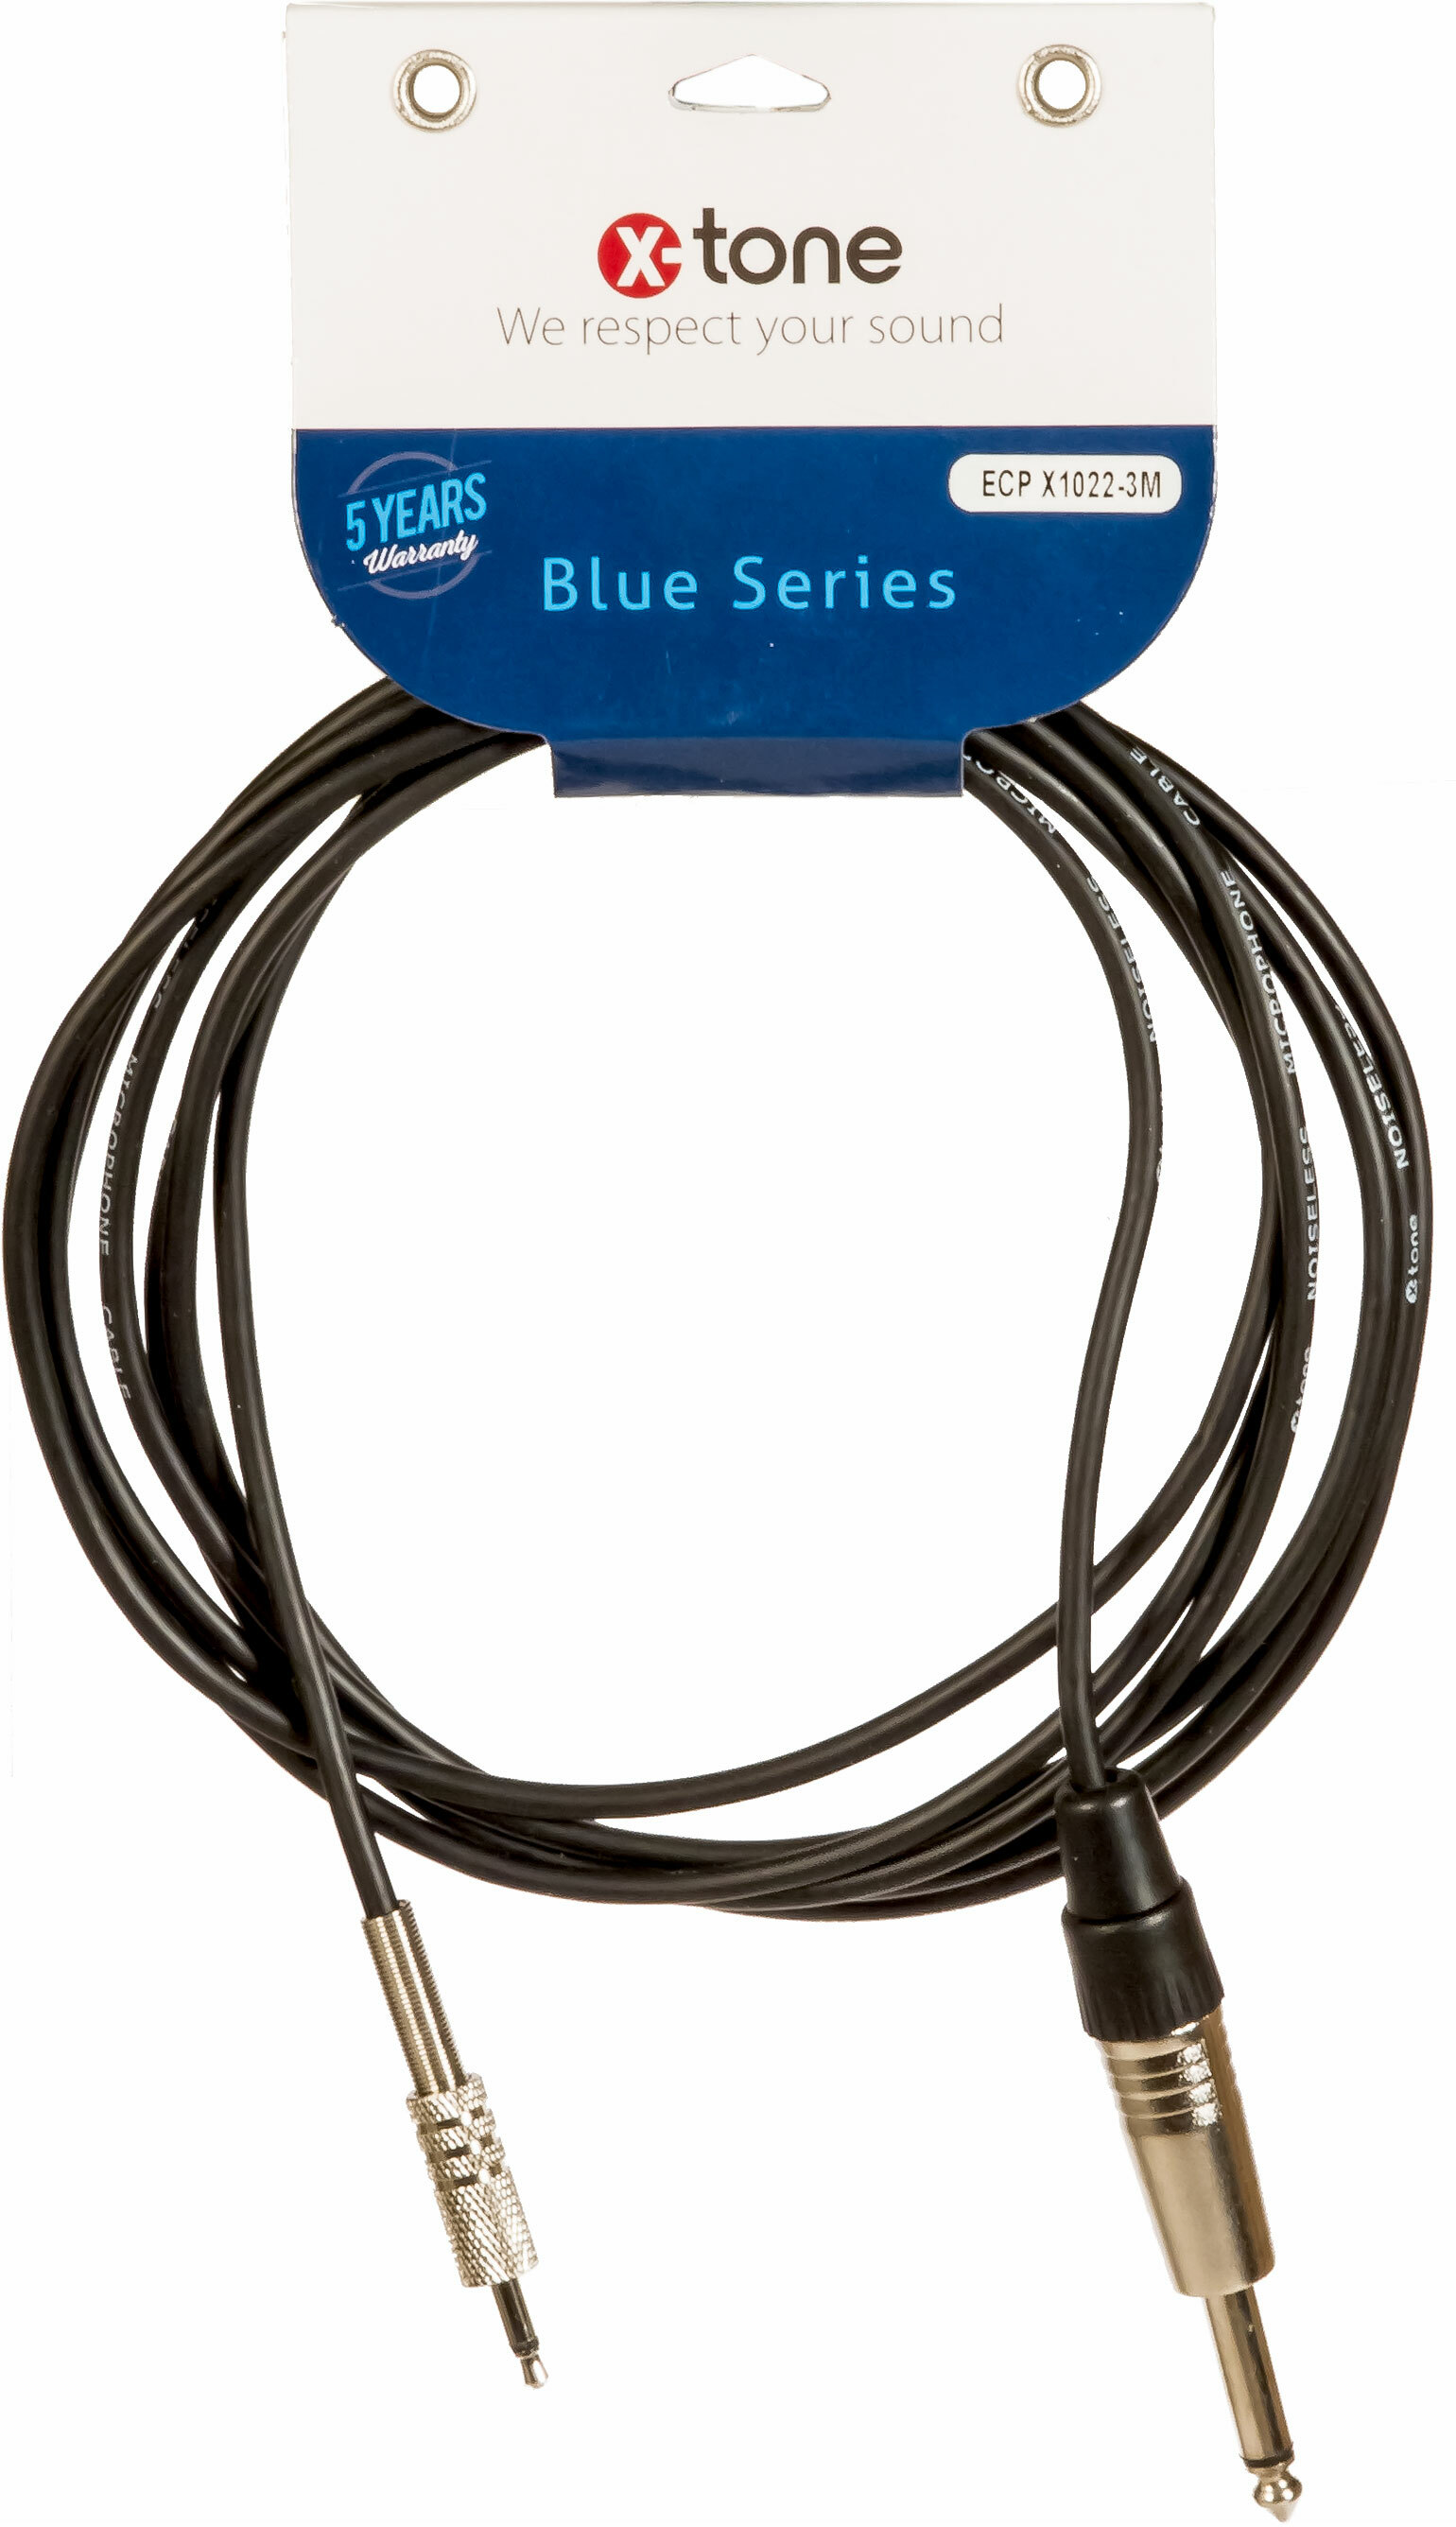 X-tone Mini Jack / Jack 3m Blue Series (x1022-3m) - Cable - Main picture